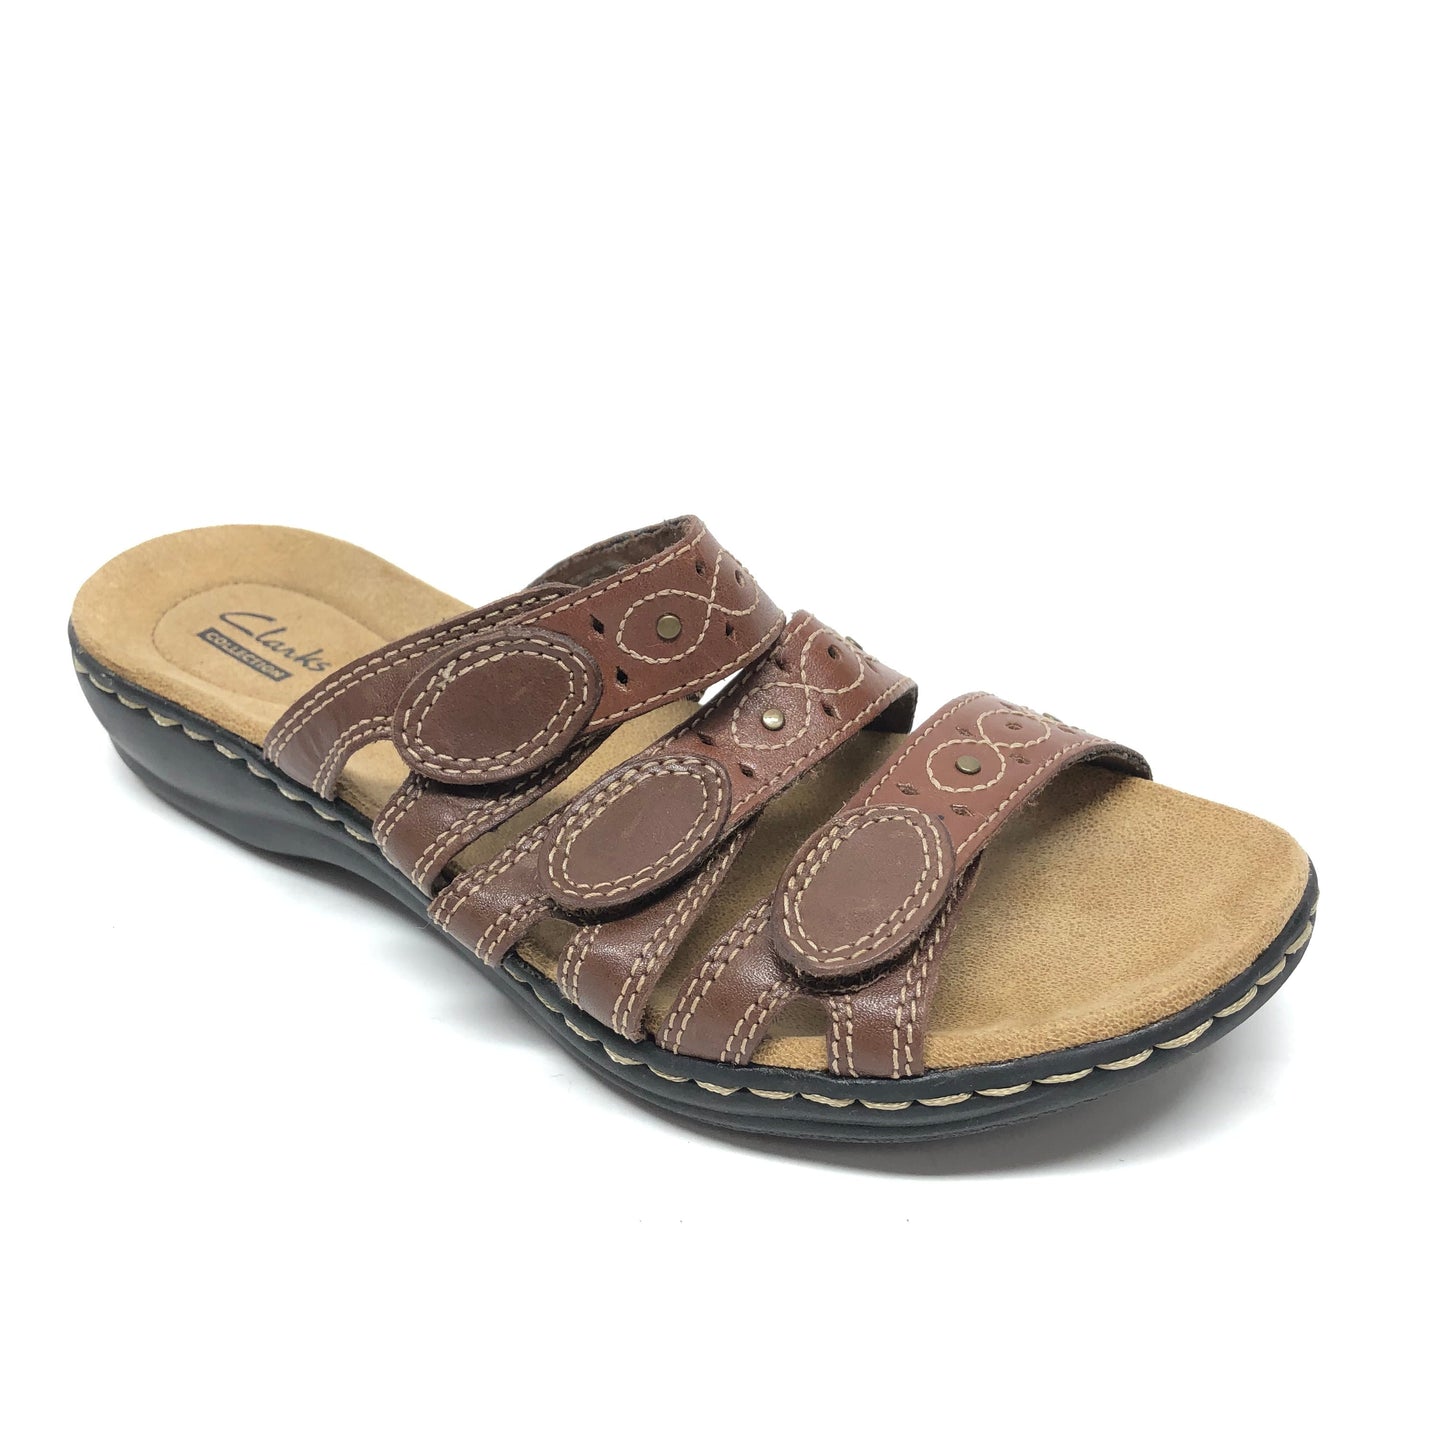 Brown Sandals Flats Clarks, Size 8